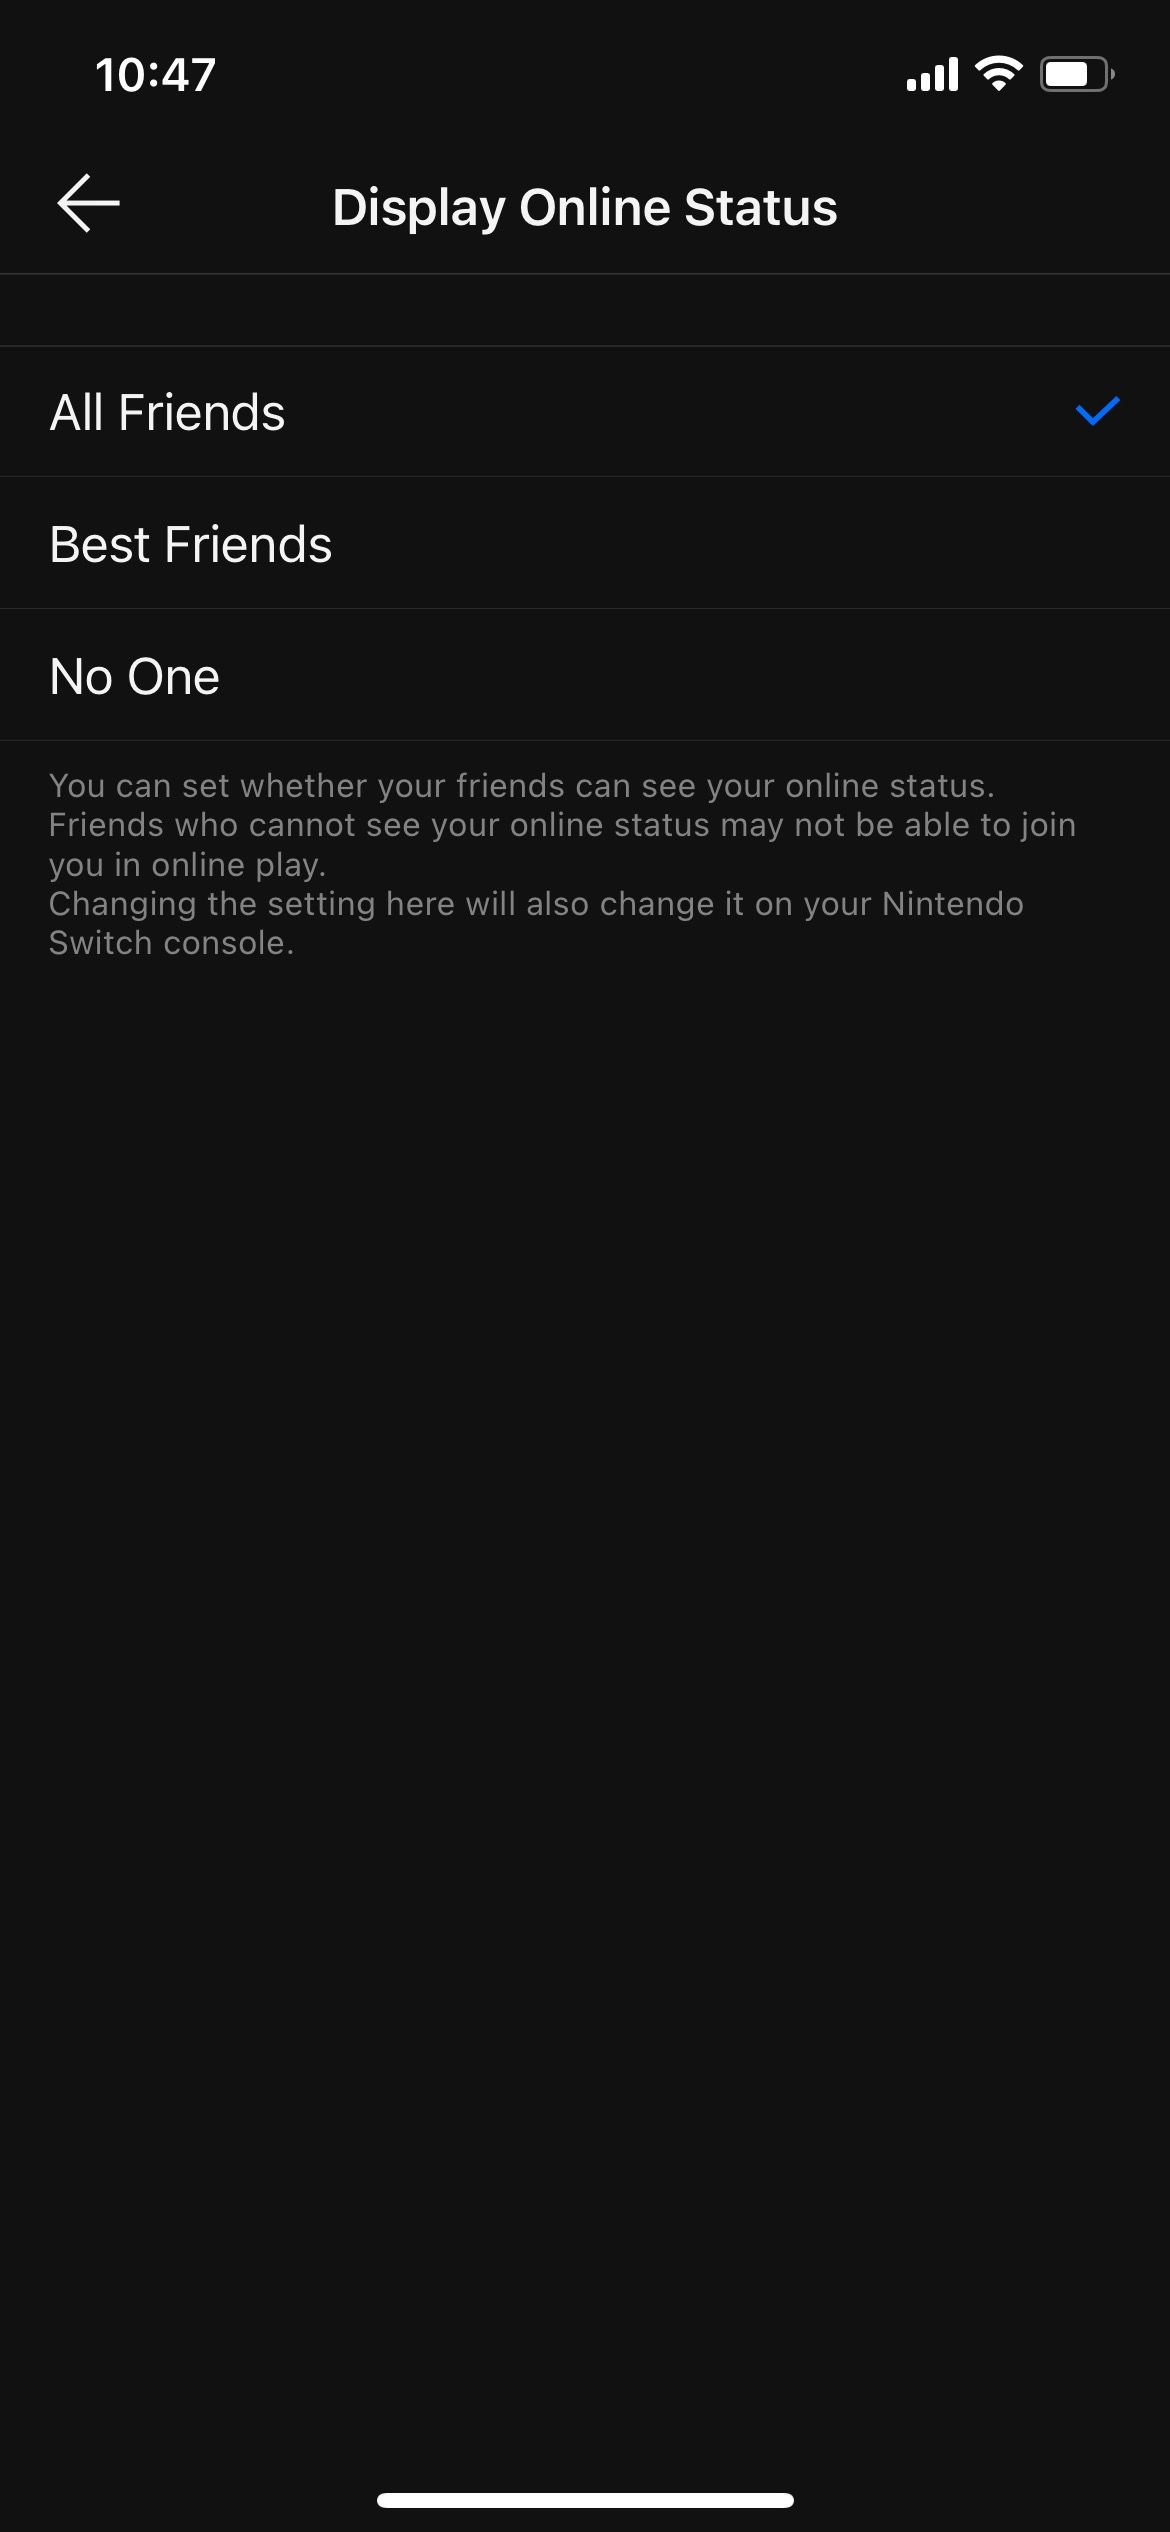 Display Online Status Nintendo Switch app